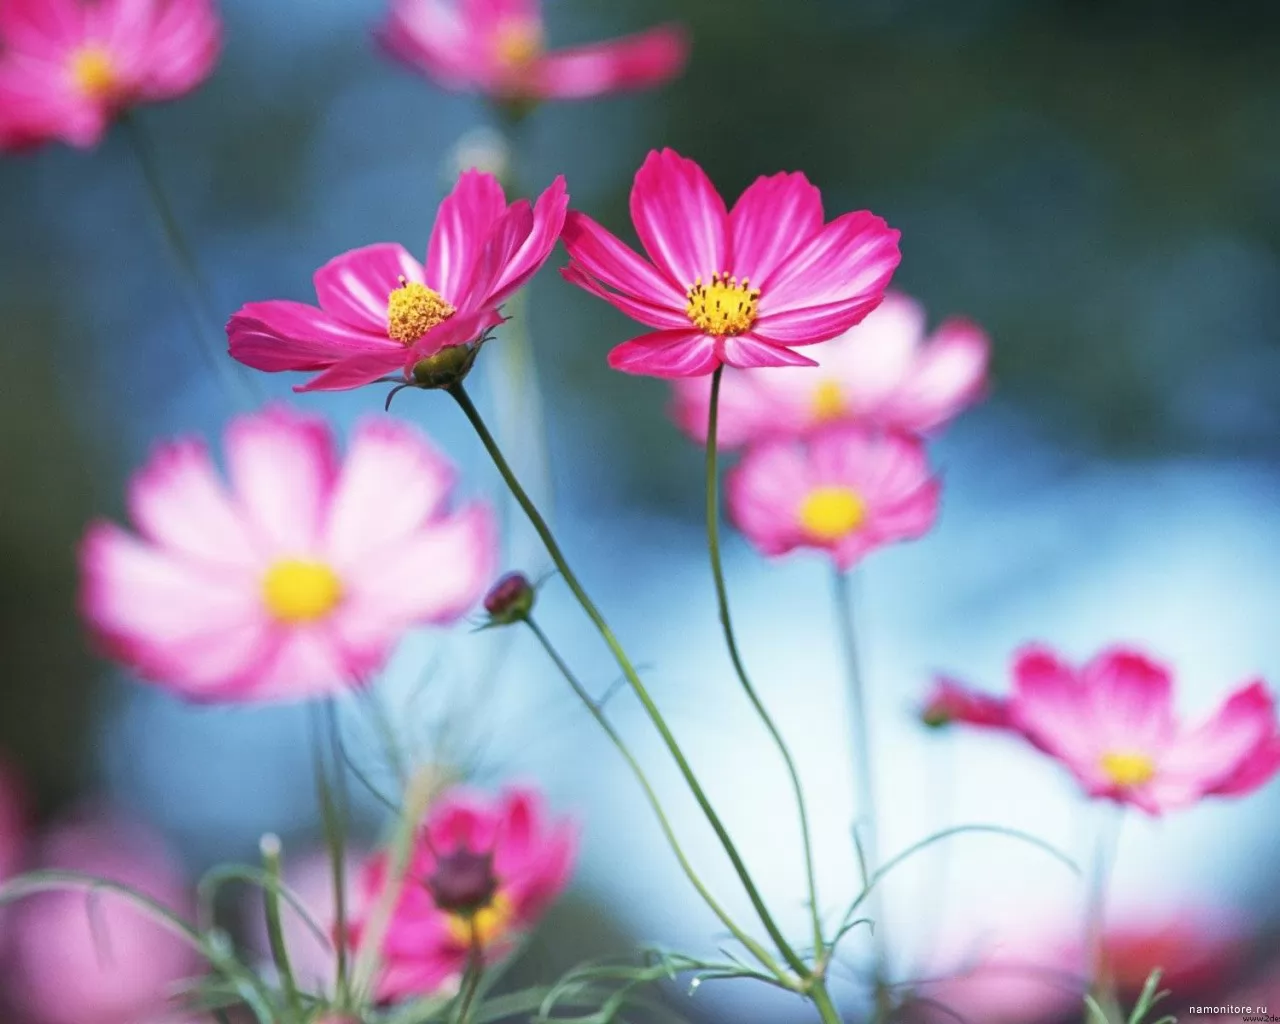 Wild flowers, best, flowers, pink x